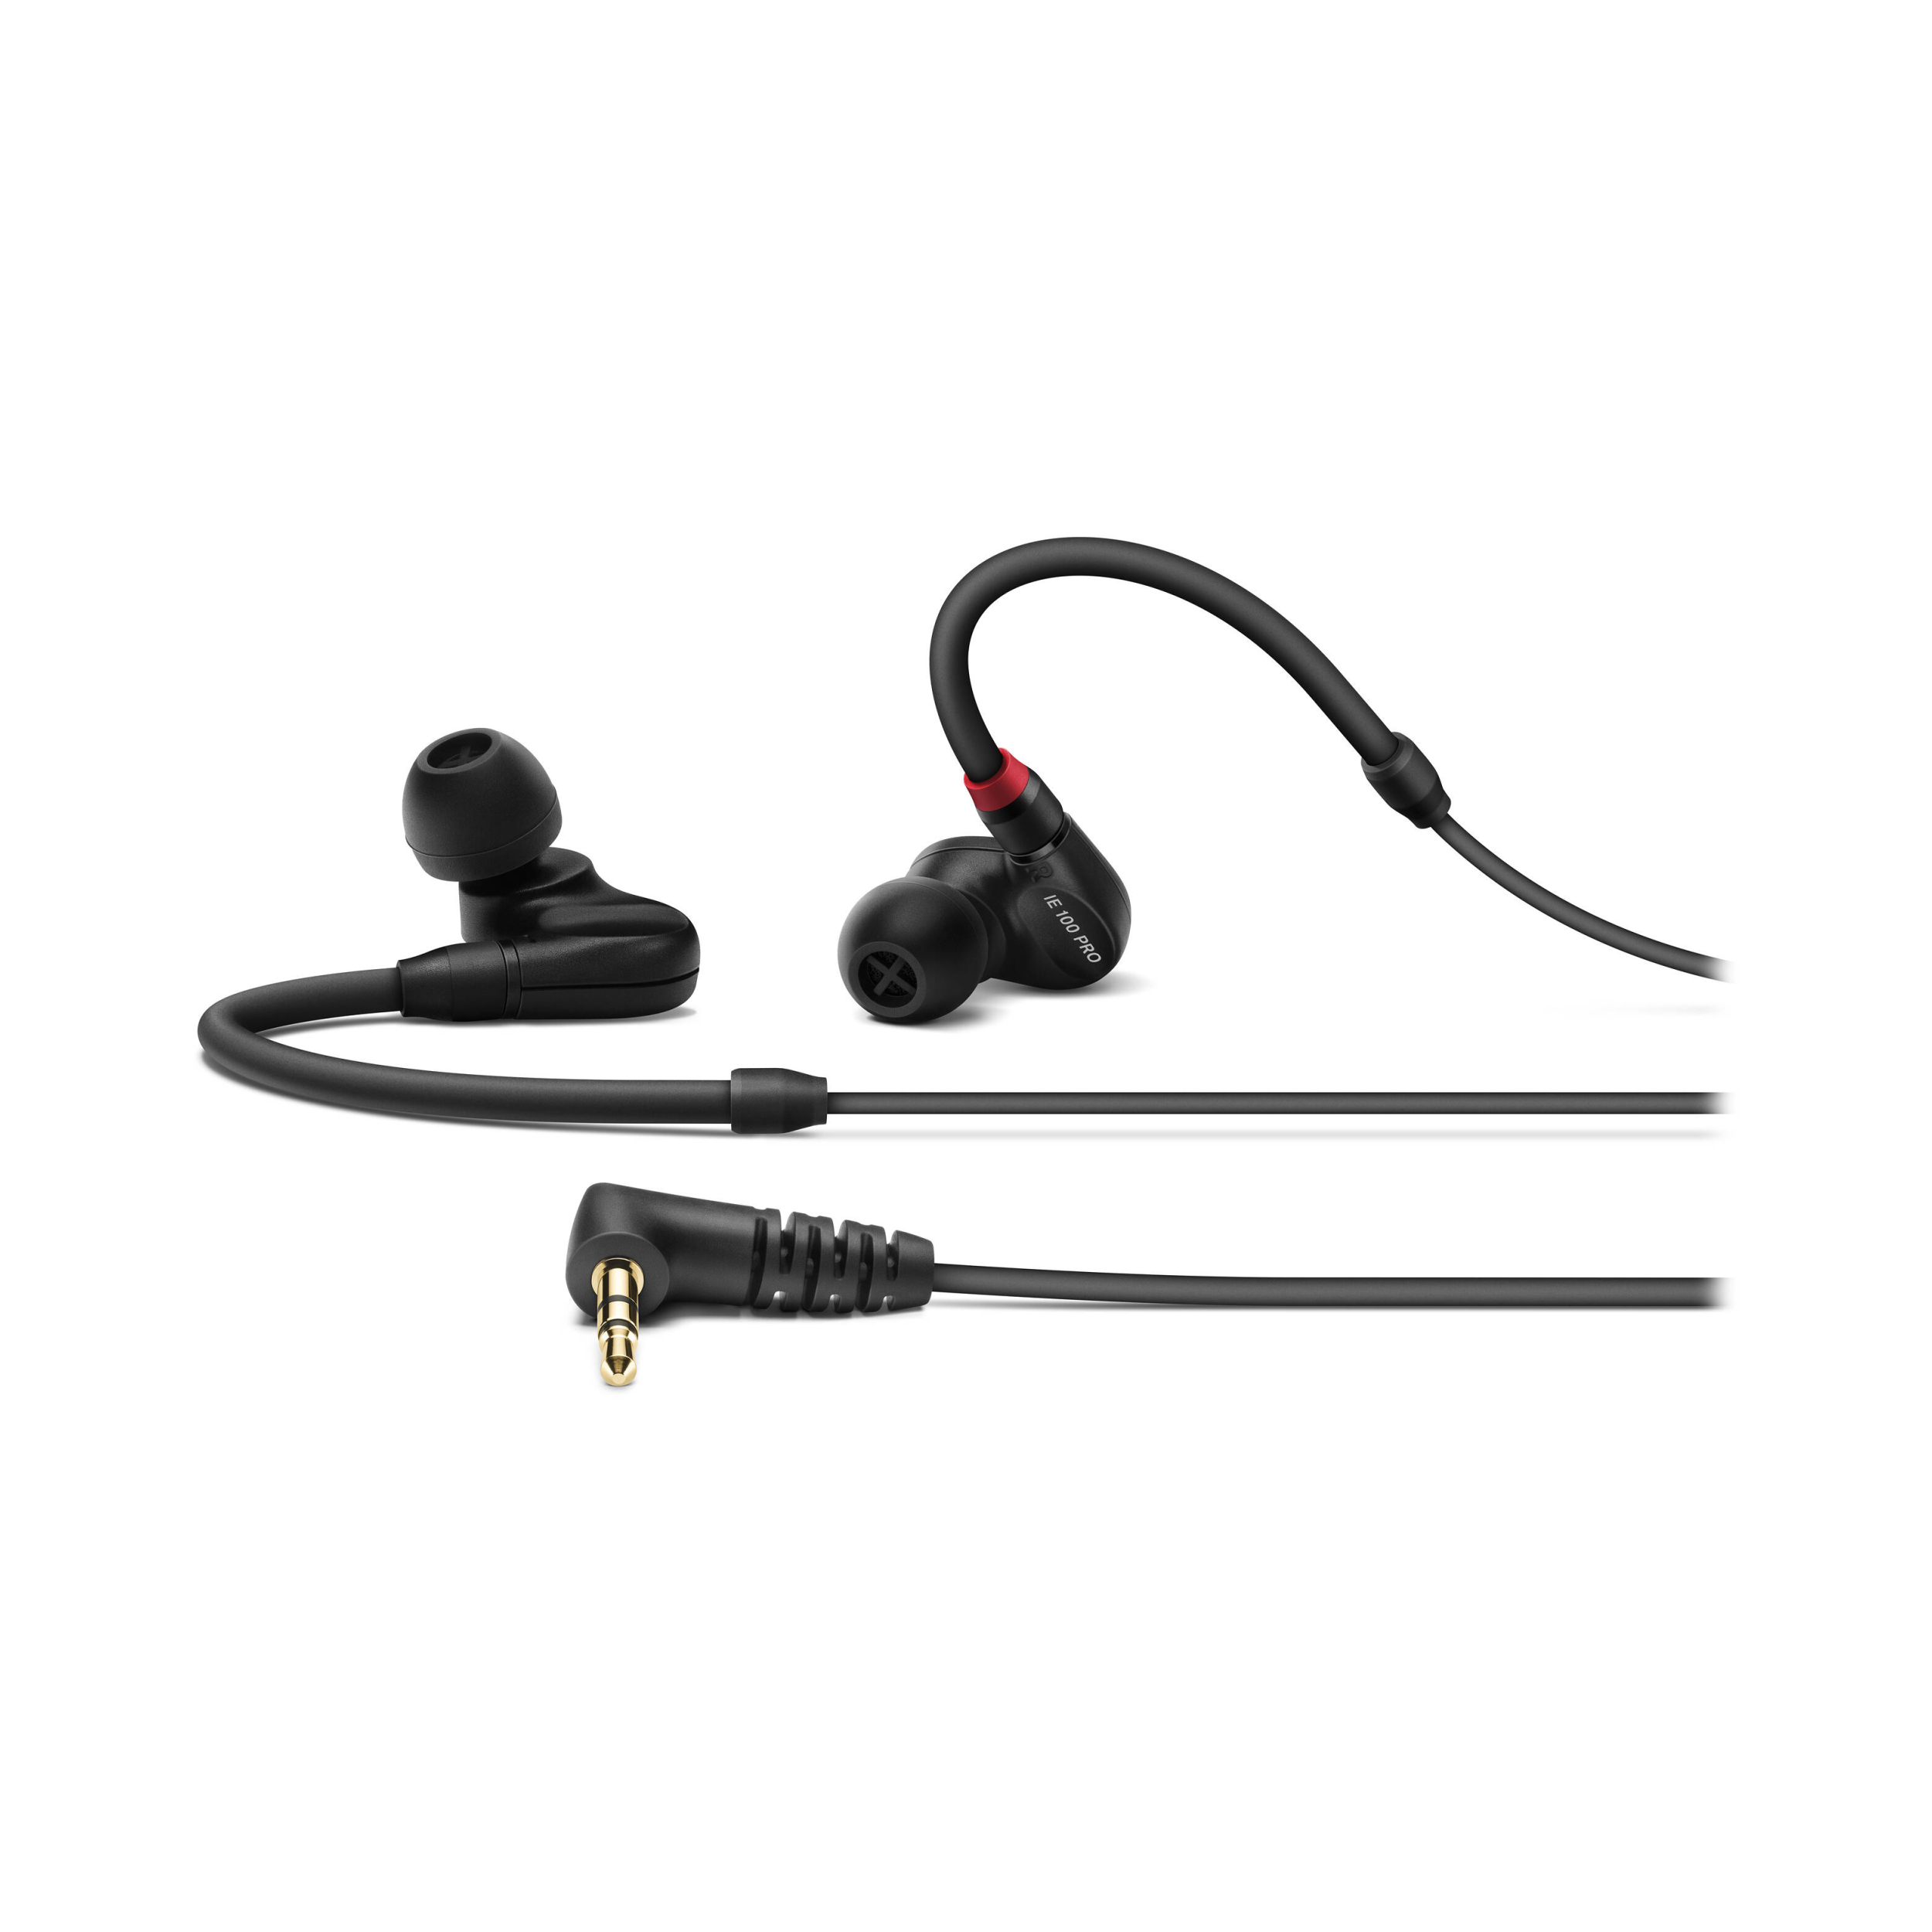 SENNHEISER IE 100 Pro Ear-Ear Monitoring Headphones - Black